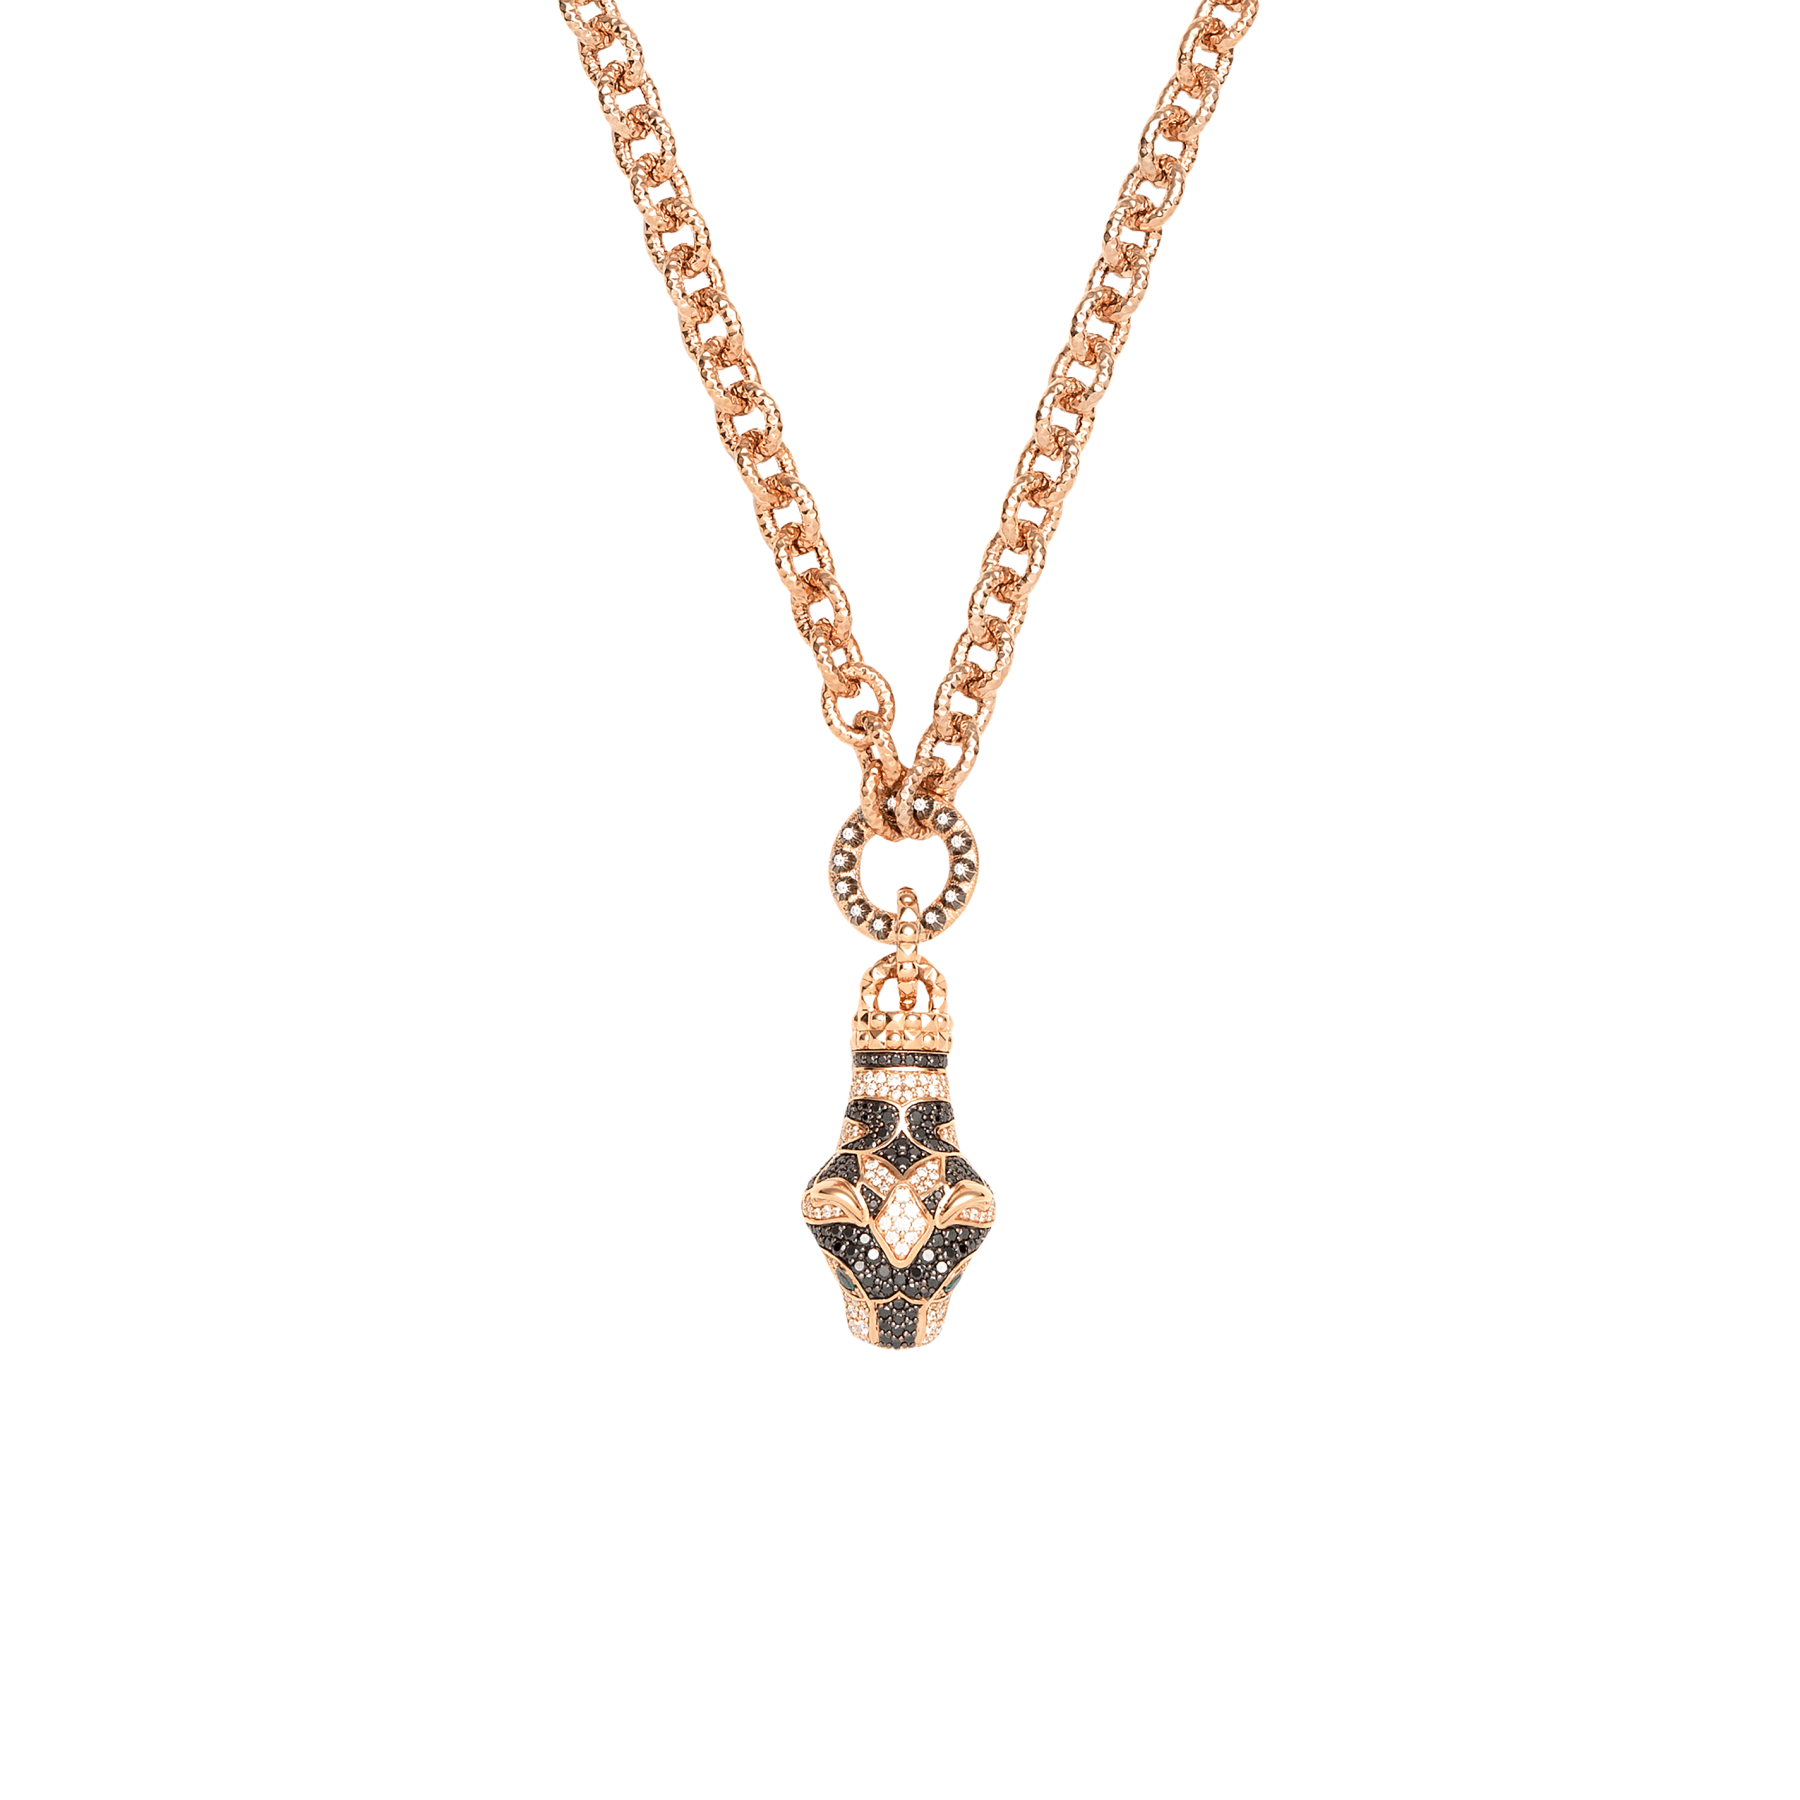 Gucci Le Marché des Marveilles Diamond Tiger Necklace in Rose Gold